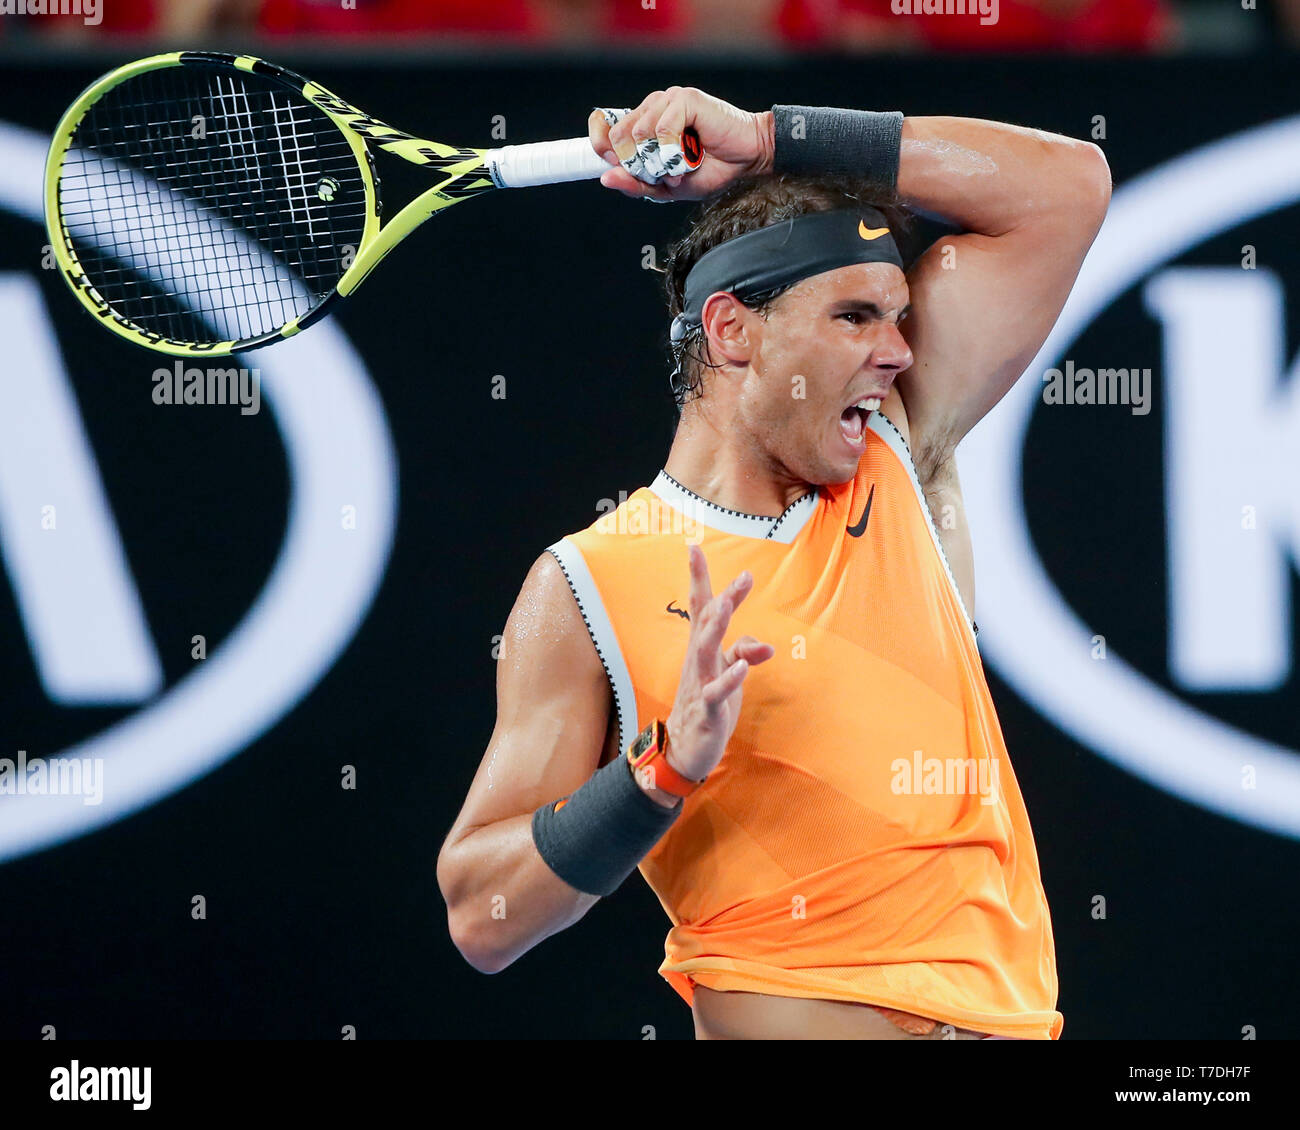 Spanish tennis player Rafael Nadal playing forehand during Australian Open  2019 tennis tournament, Melbourne Park, Melbourne, Victoria, Australia  Stock Photo - Alamy